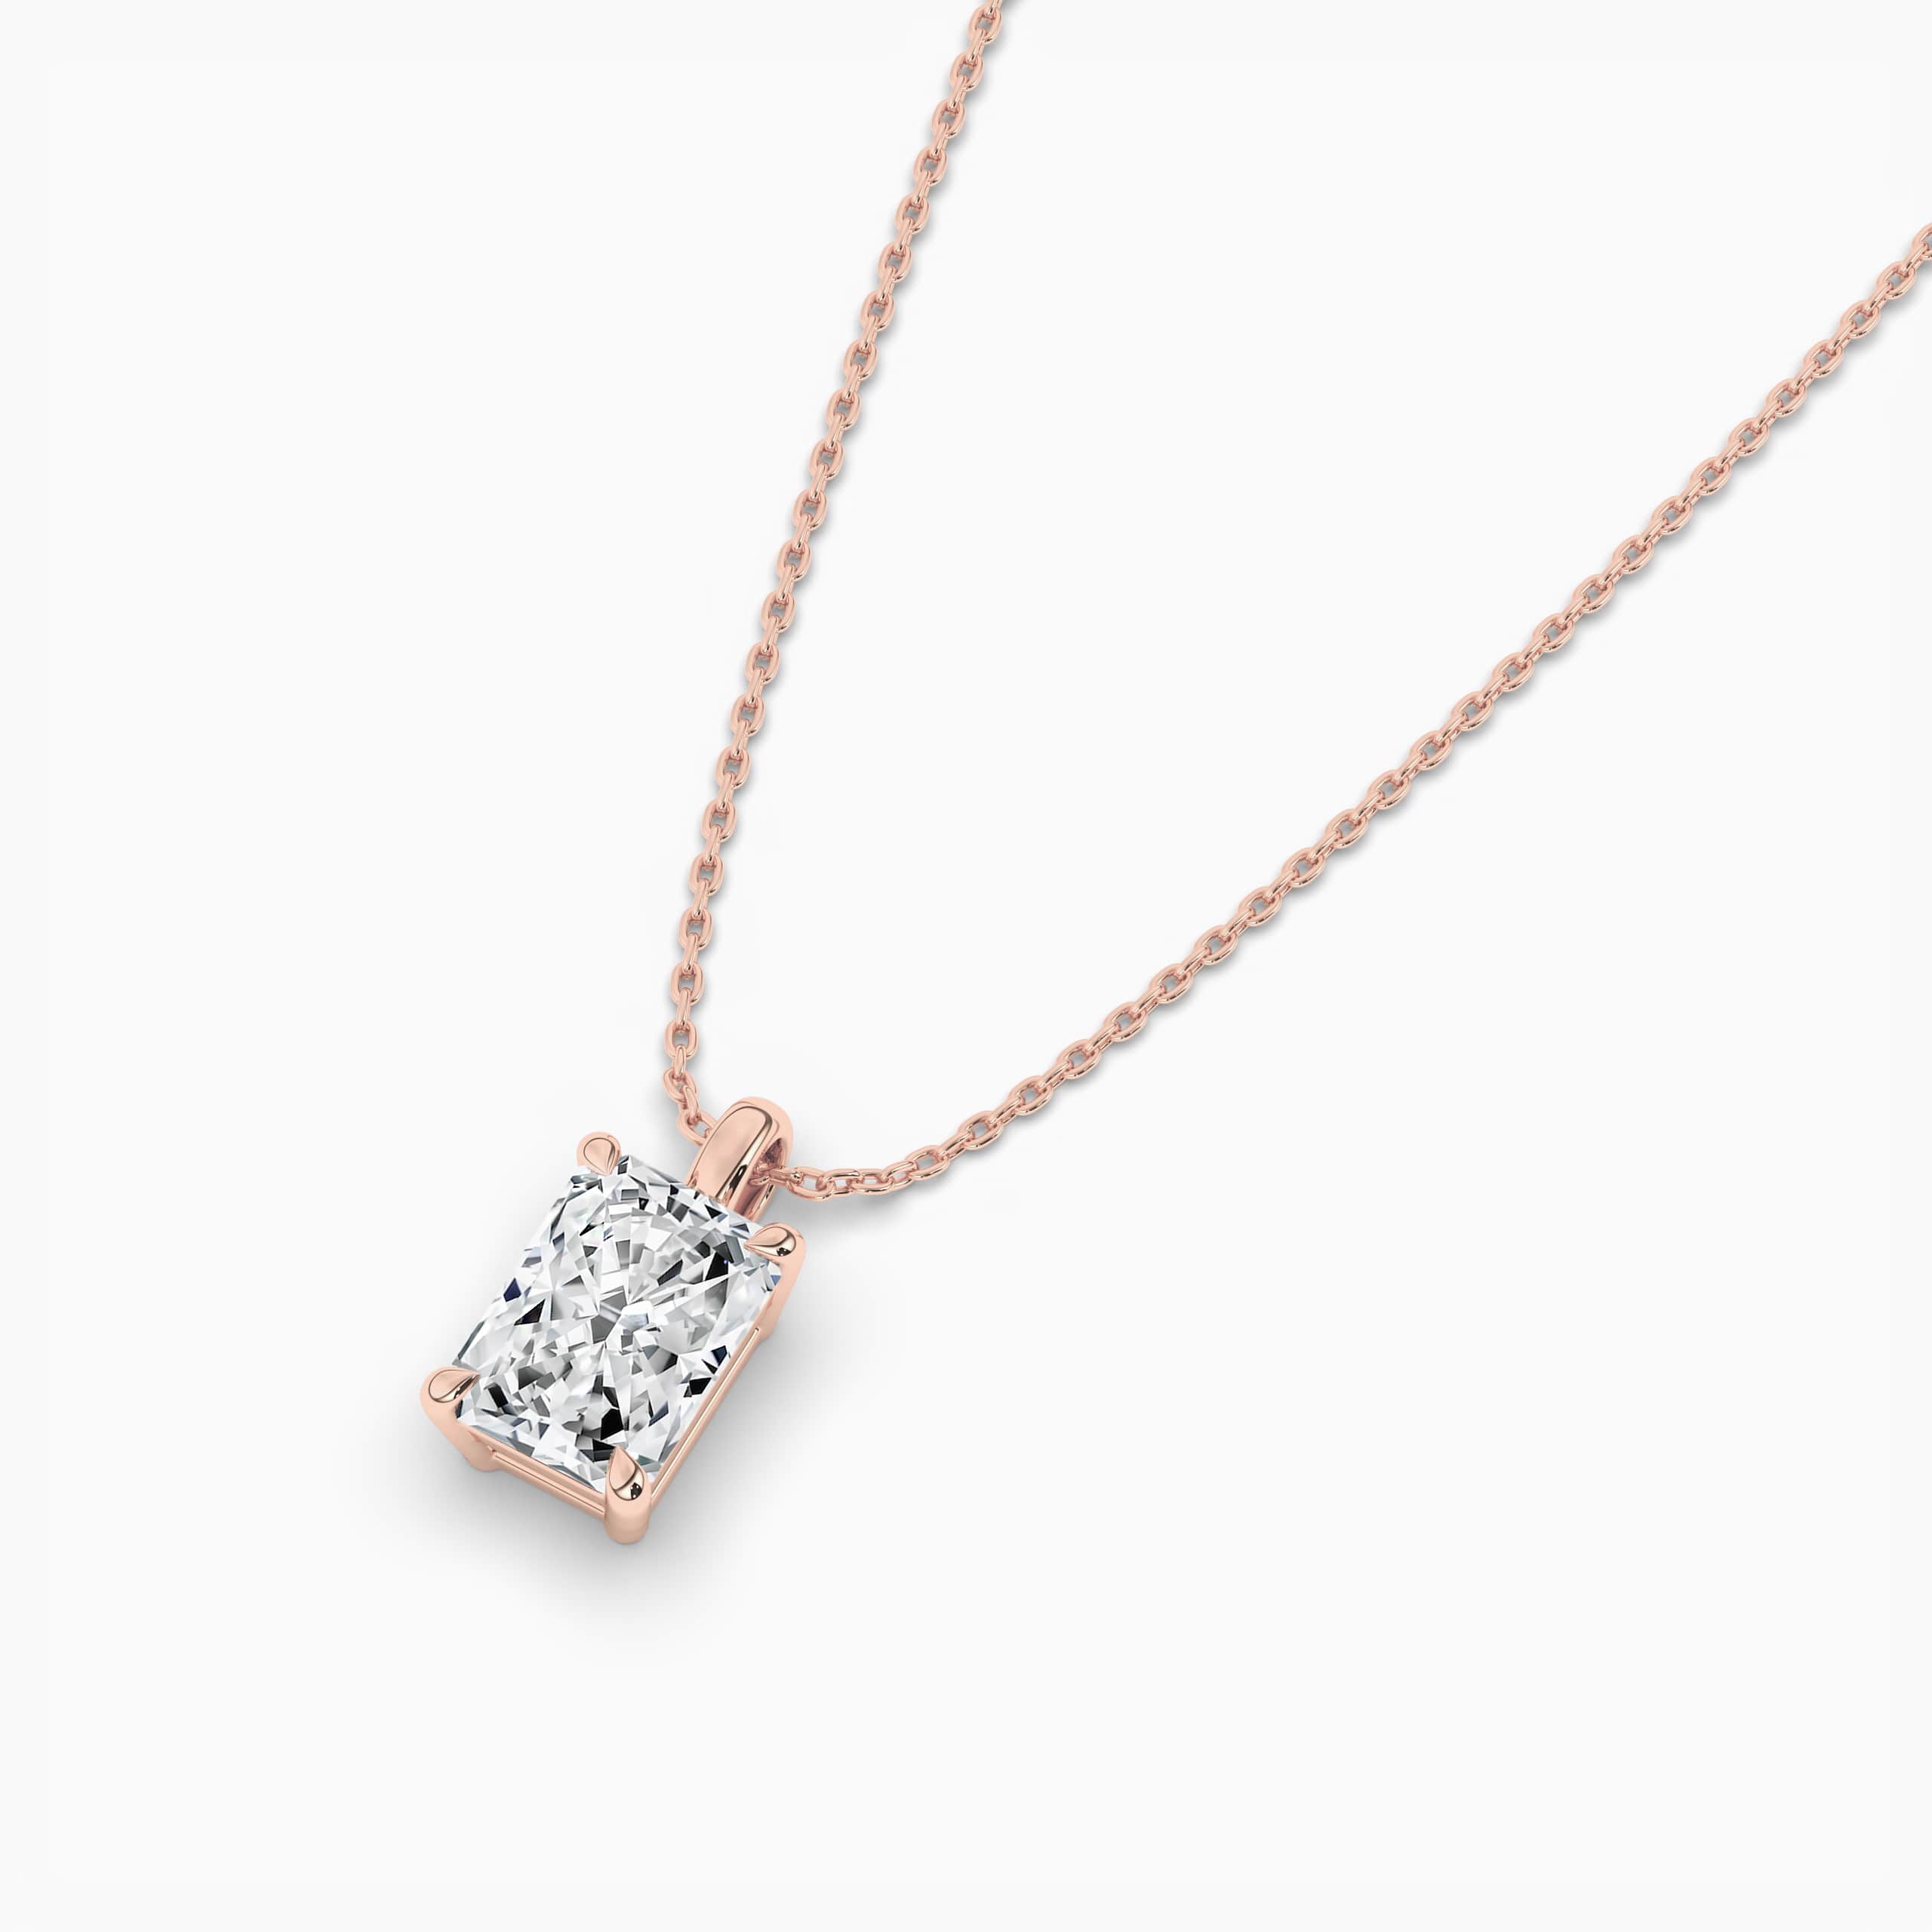 Radiant Cut Solitaire Diamond Pendant Necklace Rose Gold